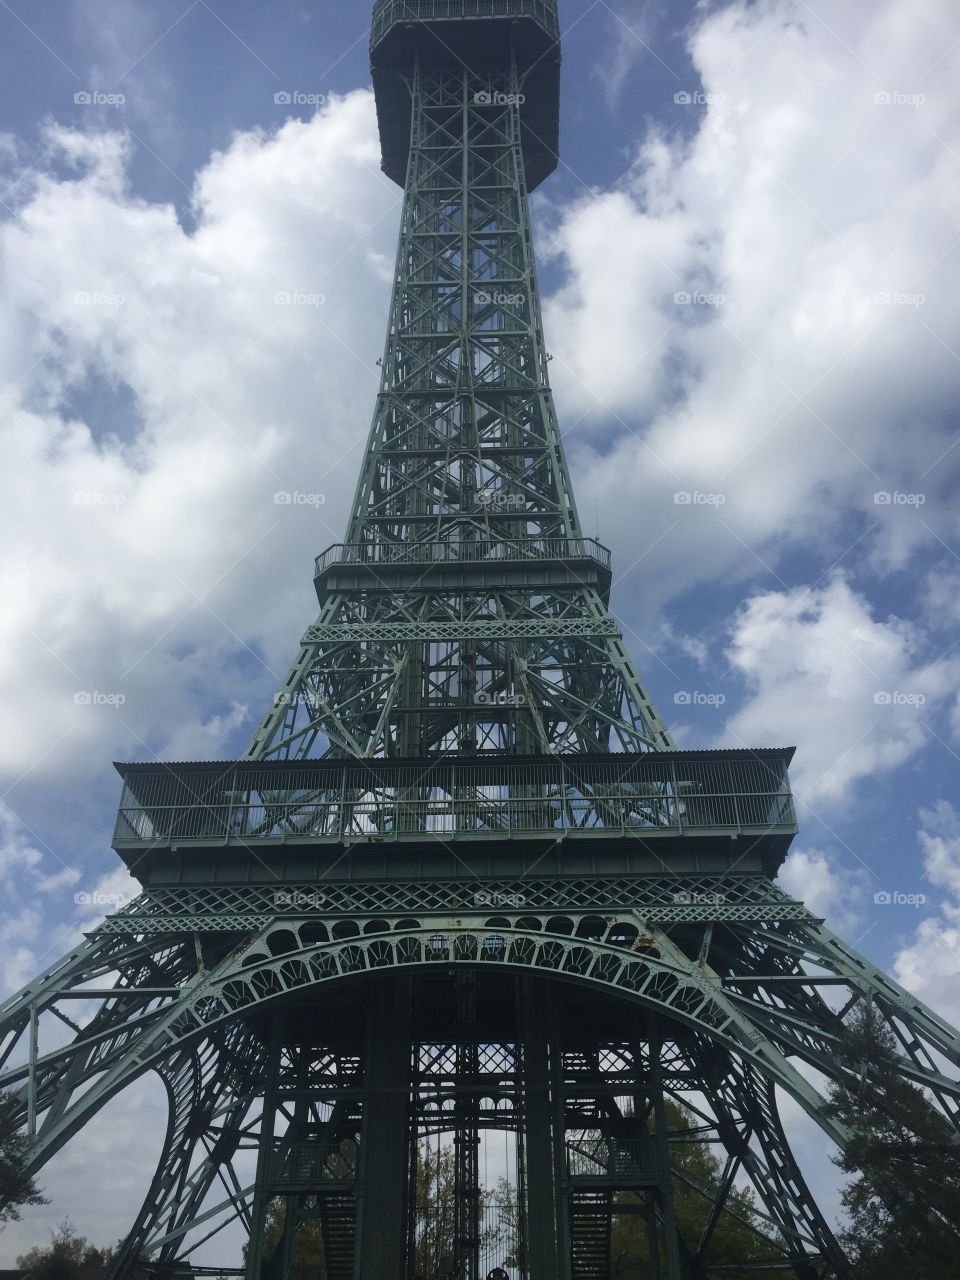 The Eiffel Tower replica in the Virginia kings dominion theme park 